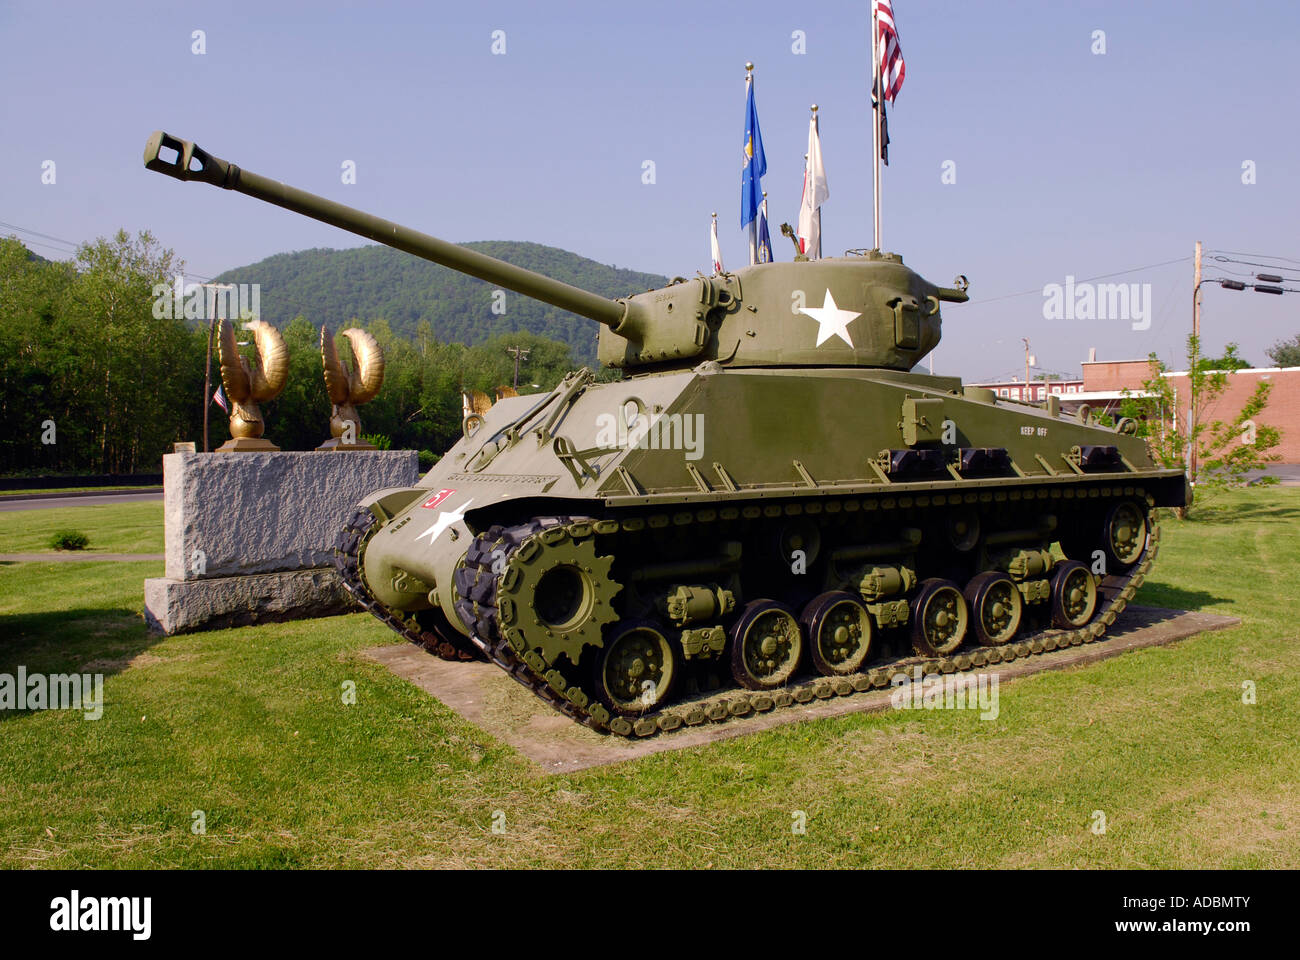 https://c8.alamy.com/comp/ADBMTY/sherman-world-war-ii-tank-on-display-ADBMTY.jpg